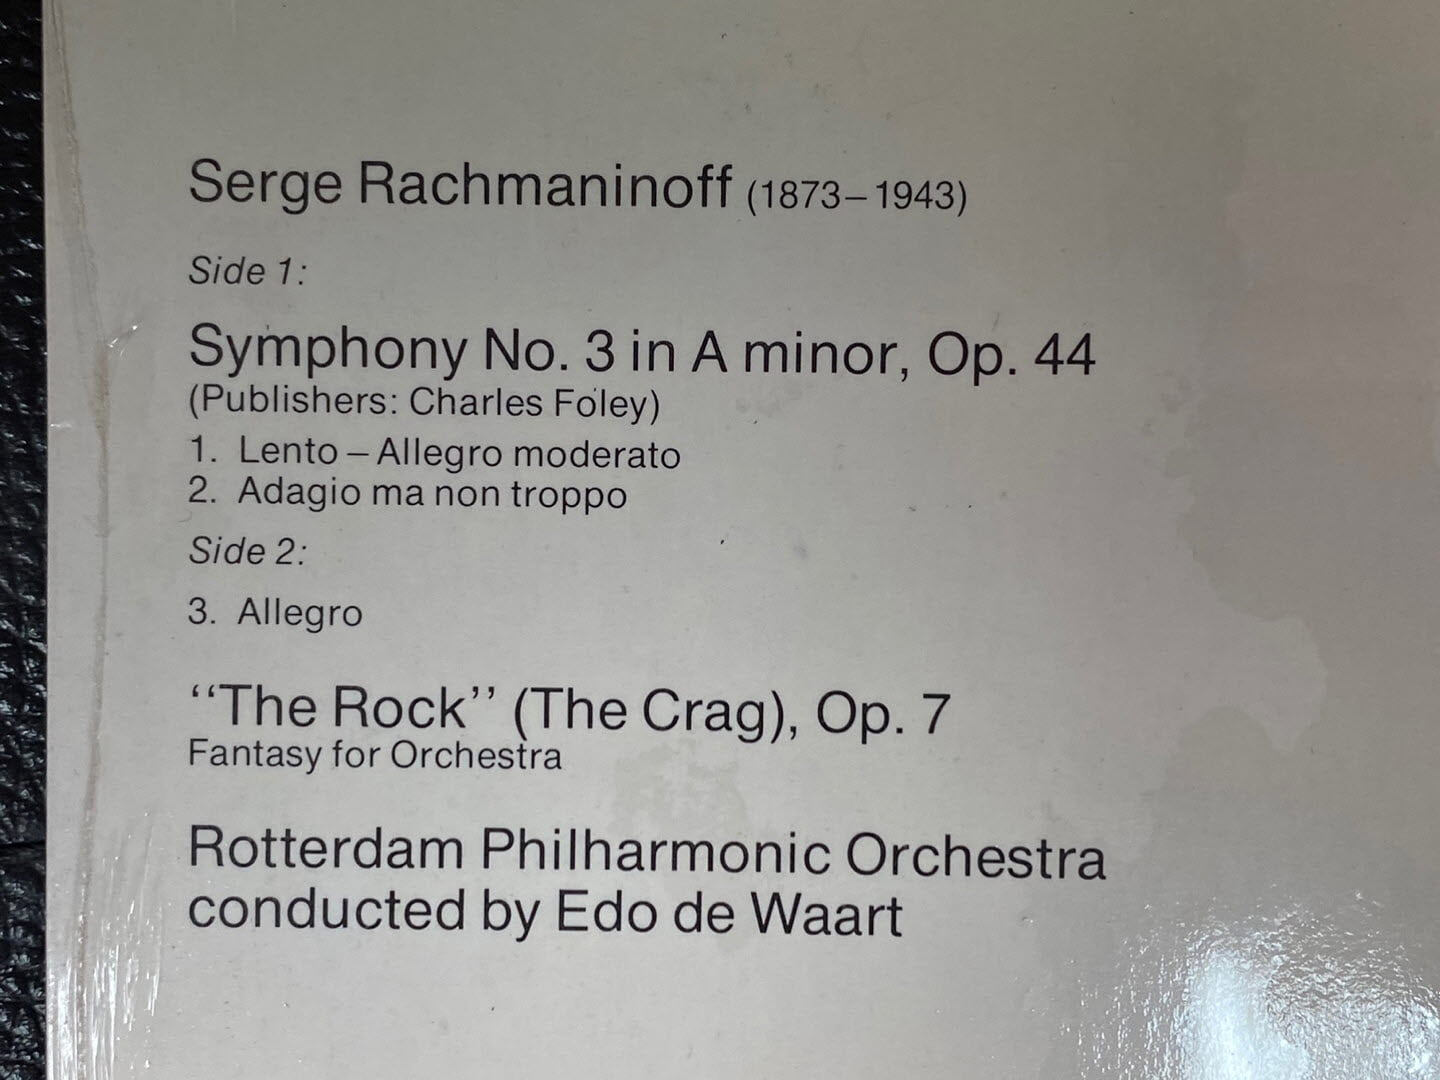 [LP] 에도 드 바르트 - Edo De Waart - Rachmaninoff Symphony No.3, The Rock LP [미개봉] [홀랜드반]